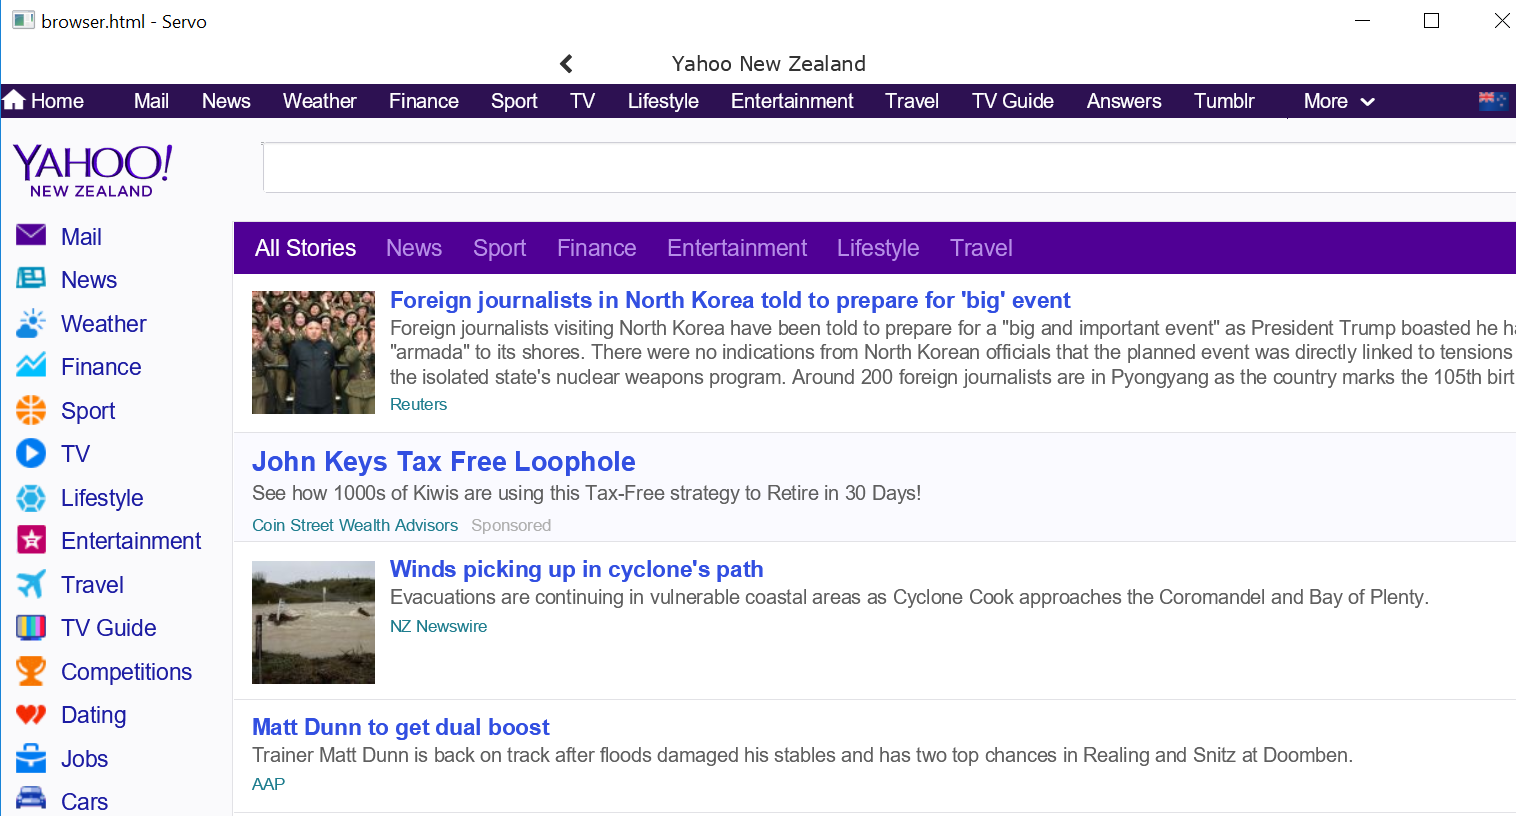 Yahoo! New Zealand in Servo